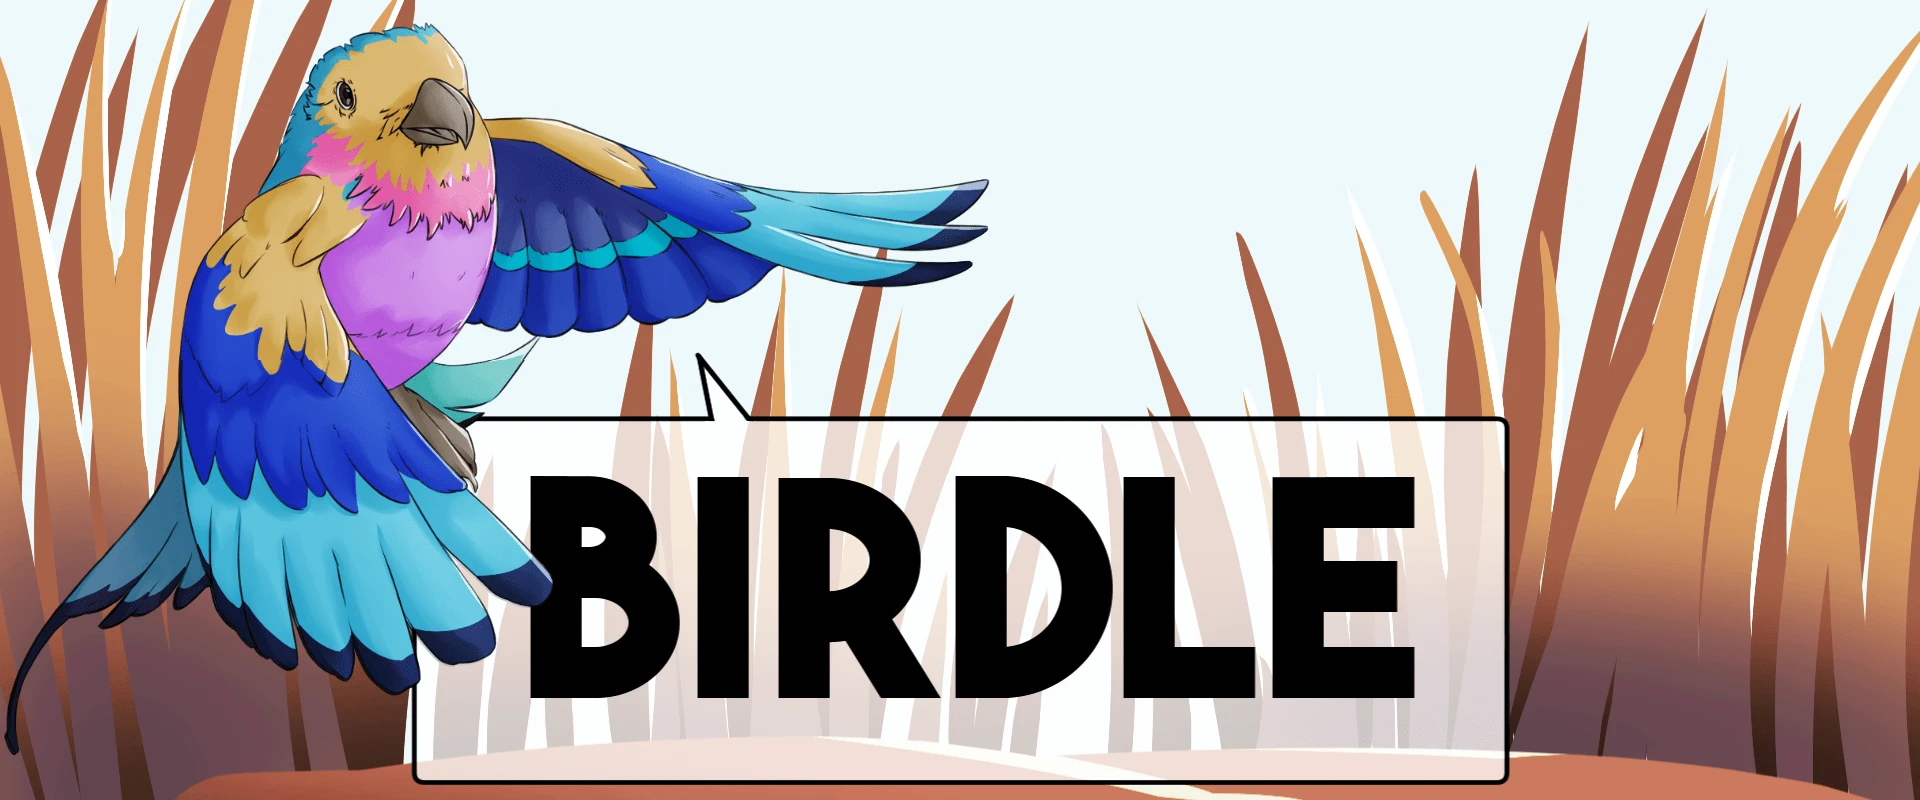 Birdle logo